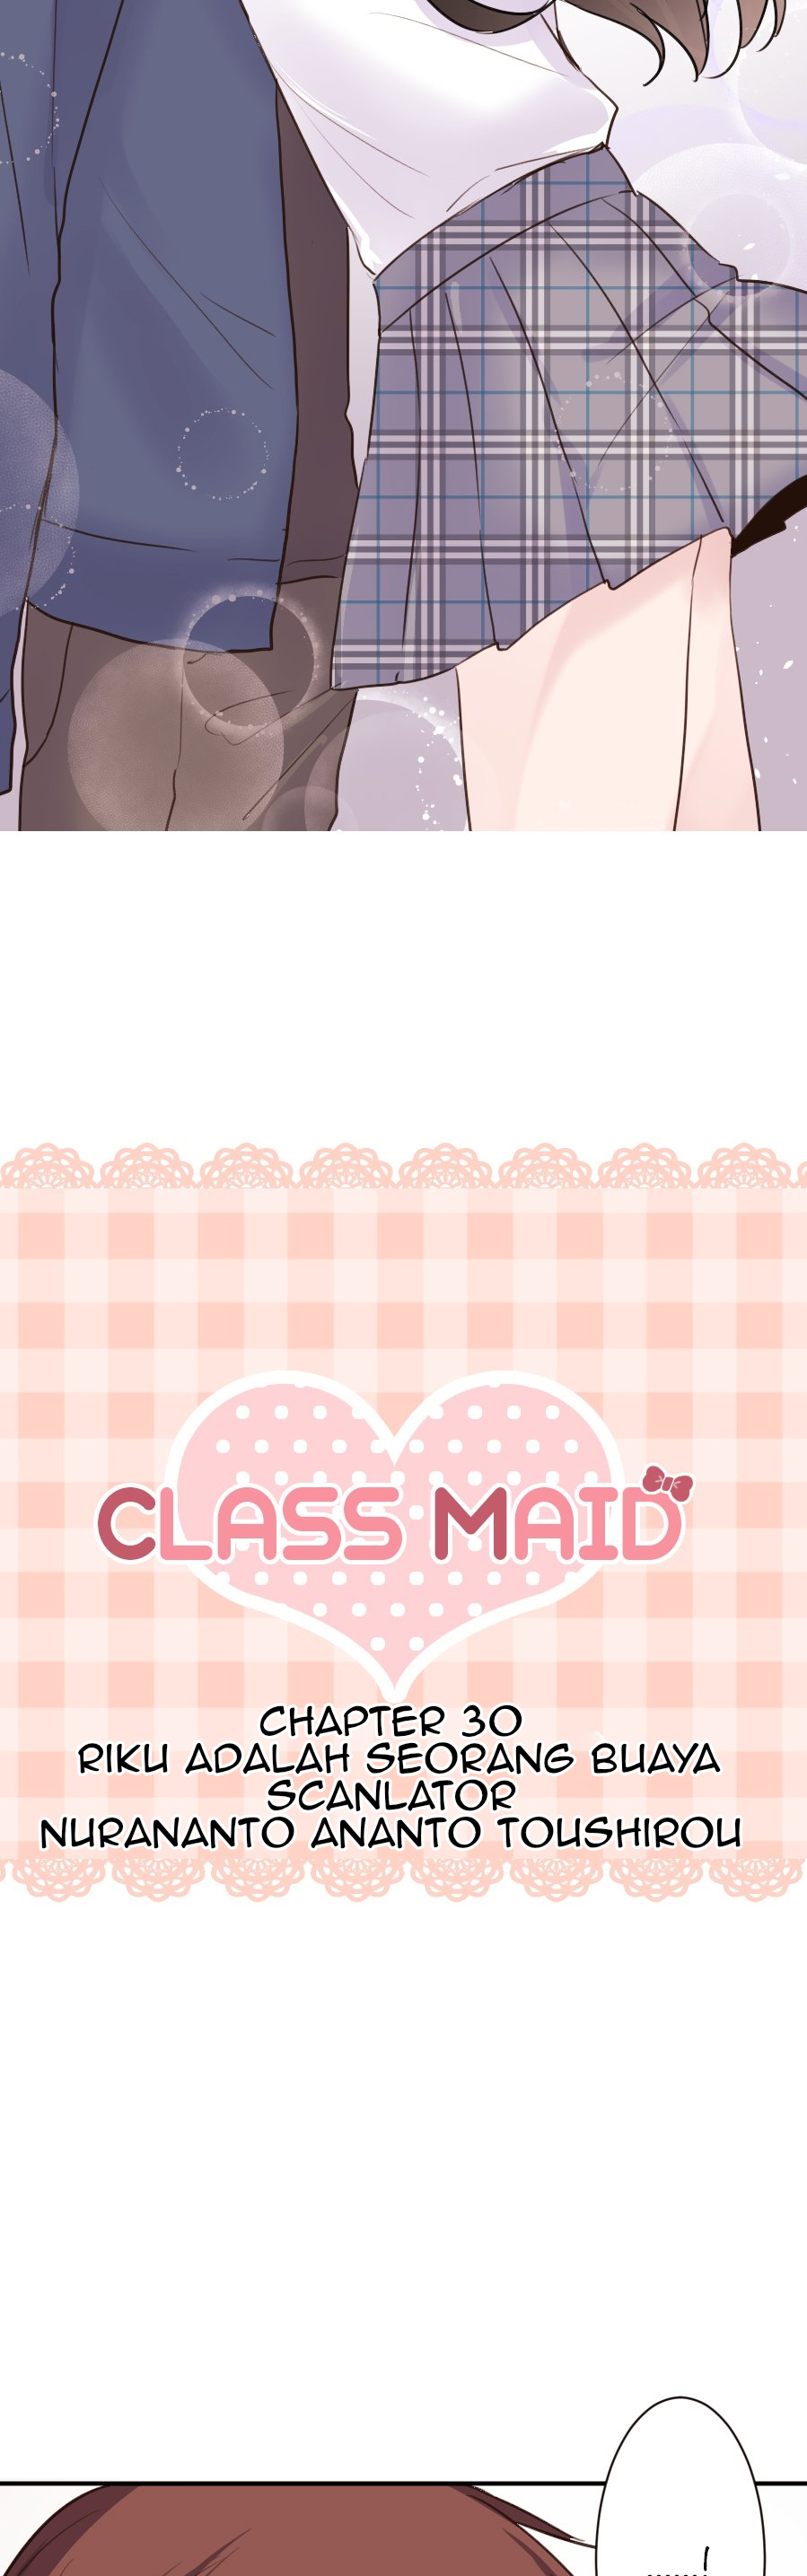 Class Maid (shimamura) Chapter 20